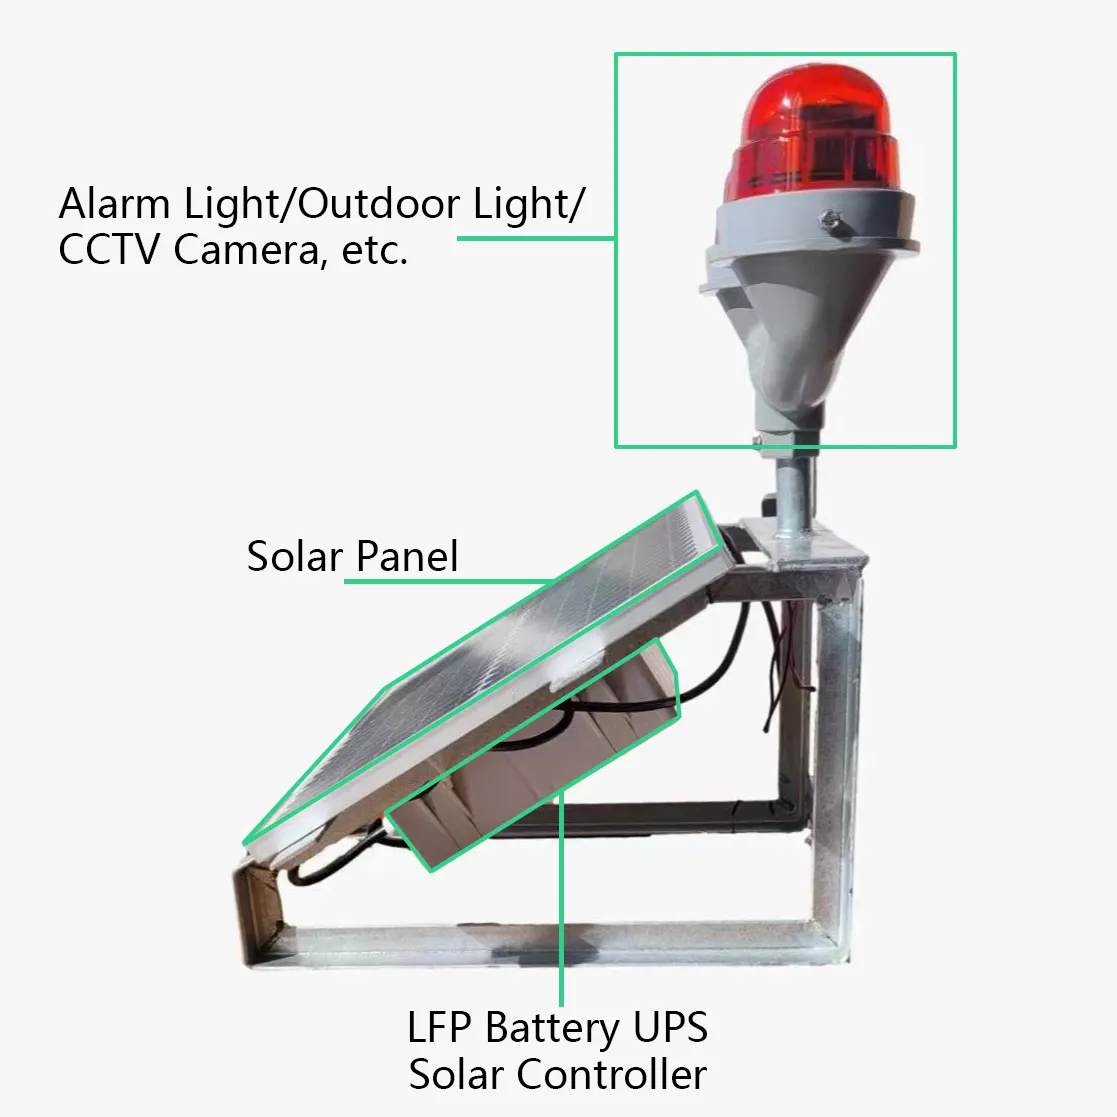 Controlador solar esperto do sistema de energia solar do costume 12.8V mini UPS para o CCTV/luz exterior/alarme